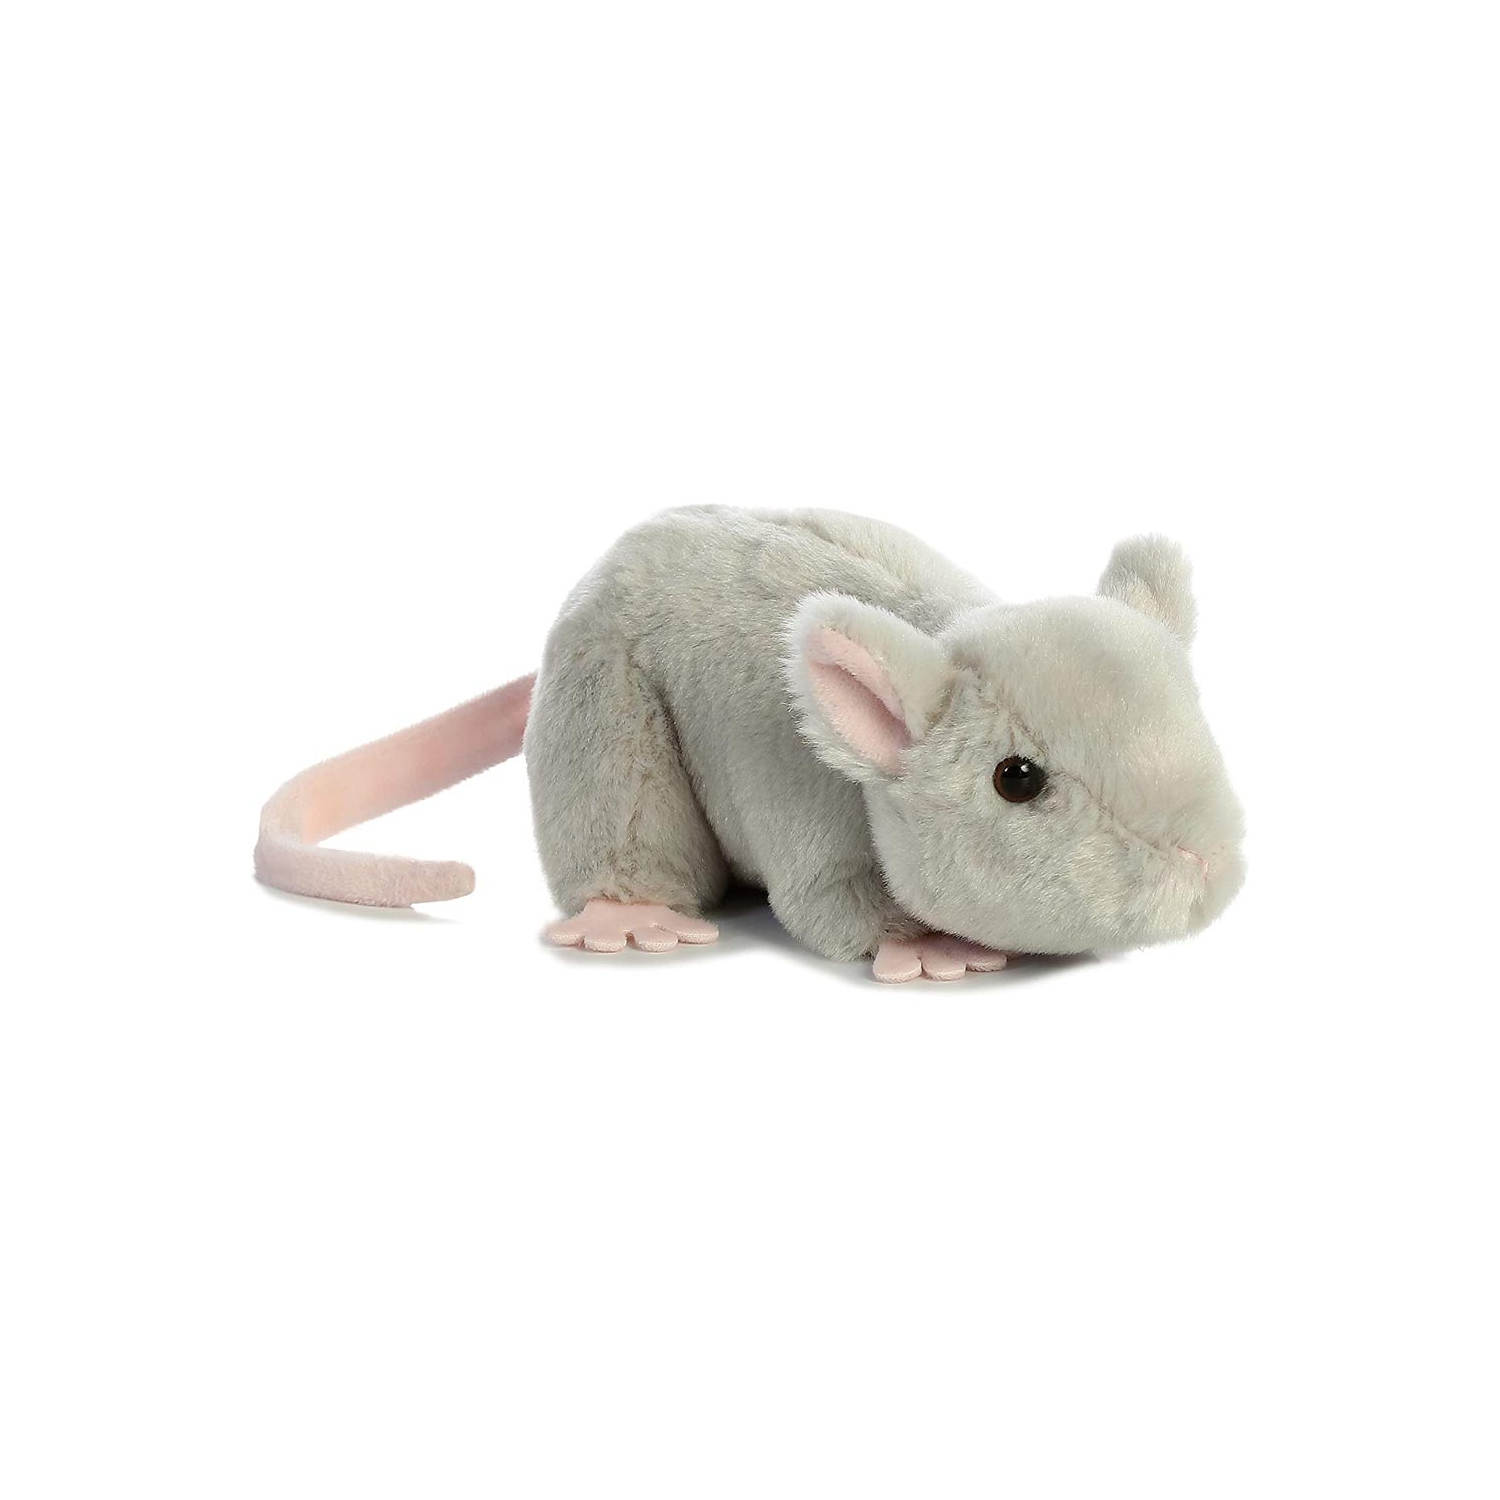 Aurora 31731 Mouse Stuffed Animal Plush Toy, 8", Grey